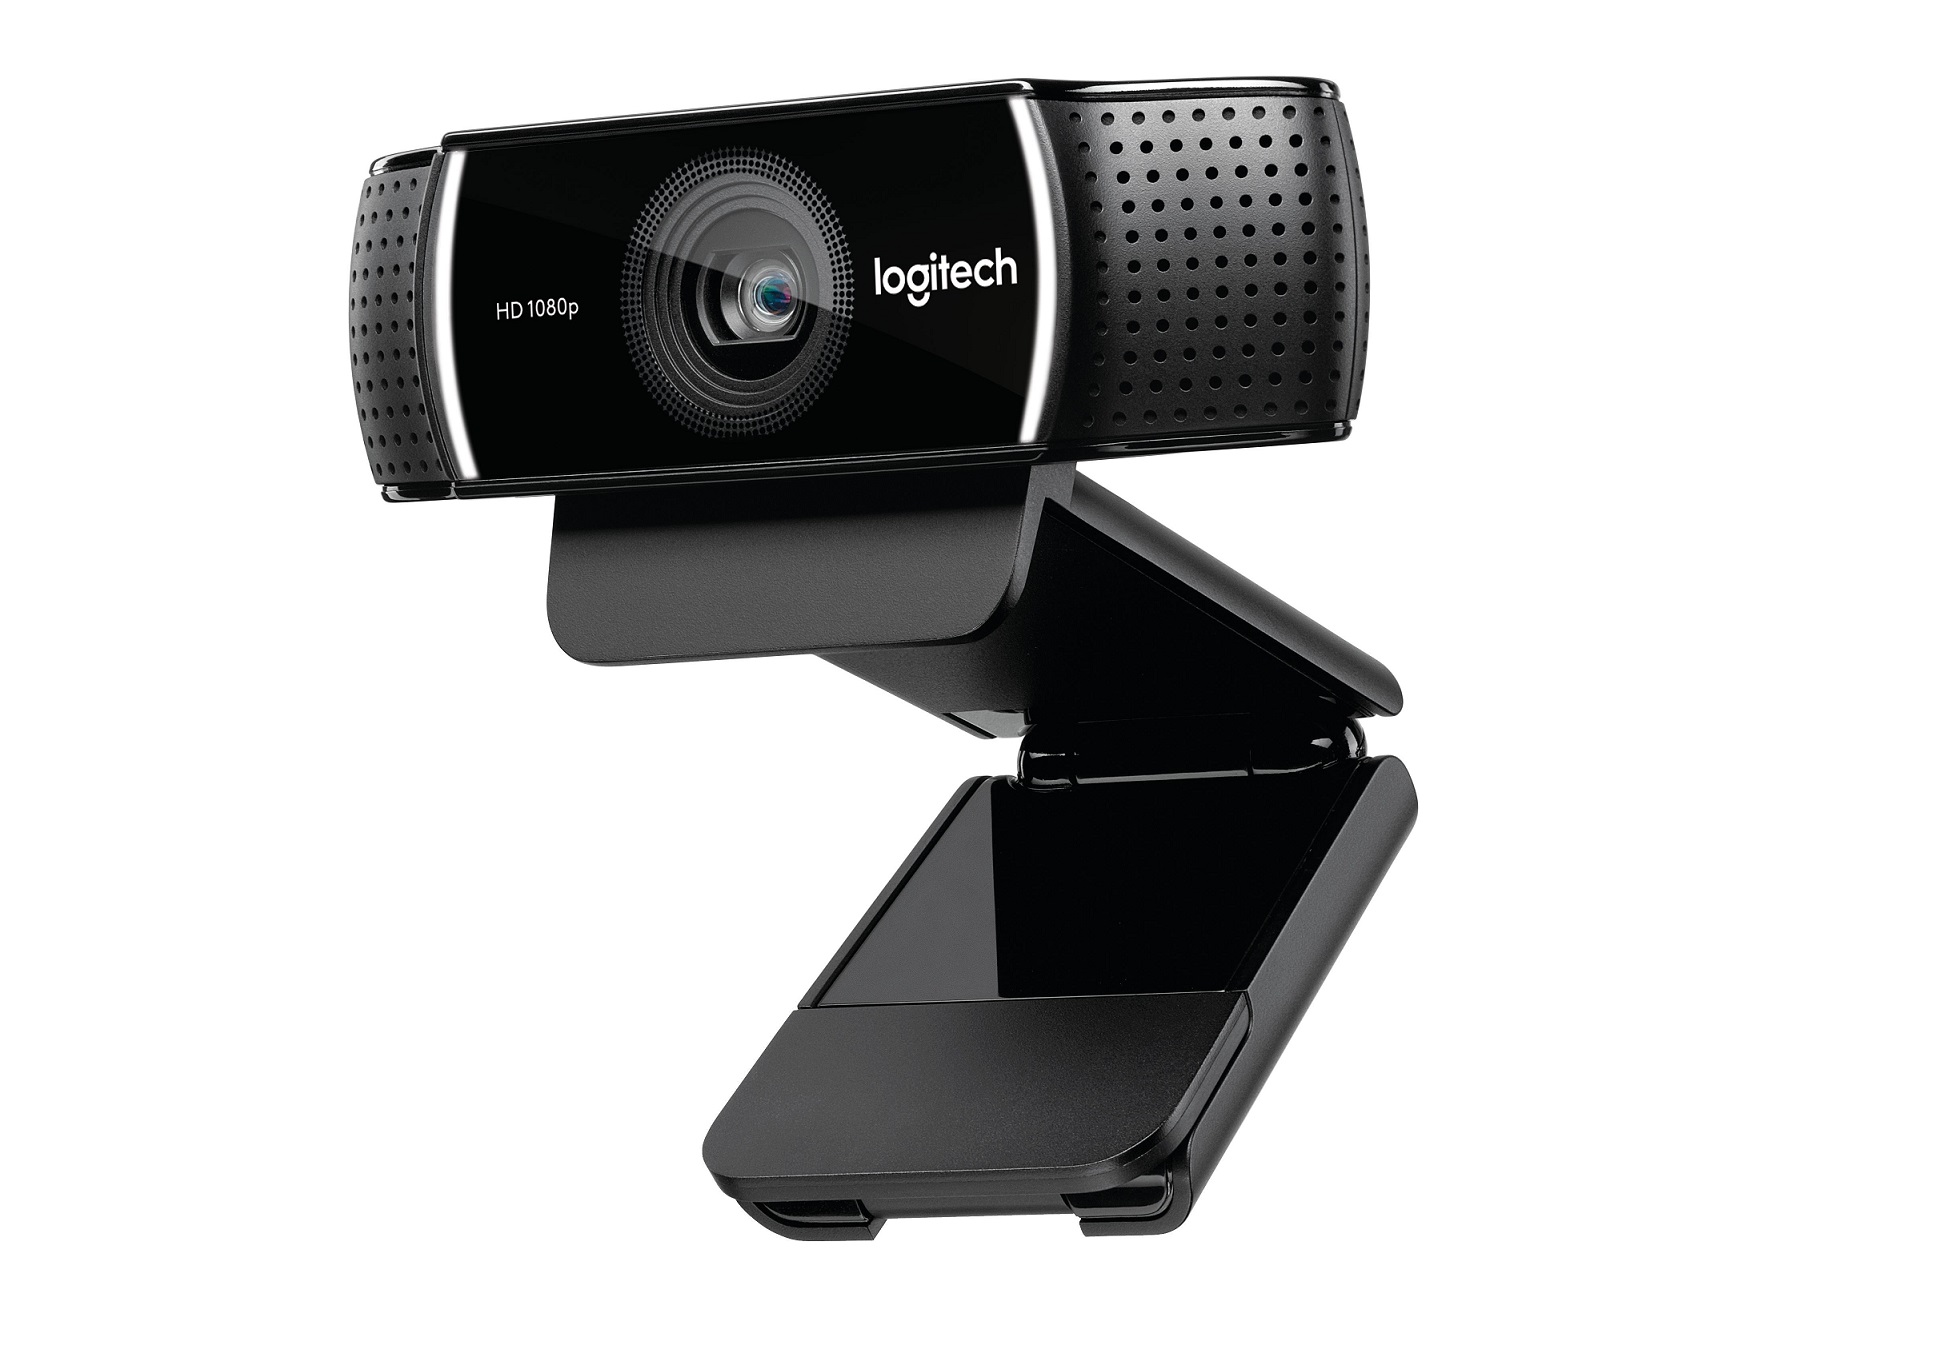 Logitech Launches C922 Pro Stream Webcam, Features 1080p Recording Under $100